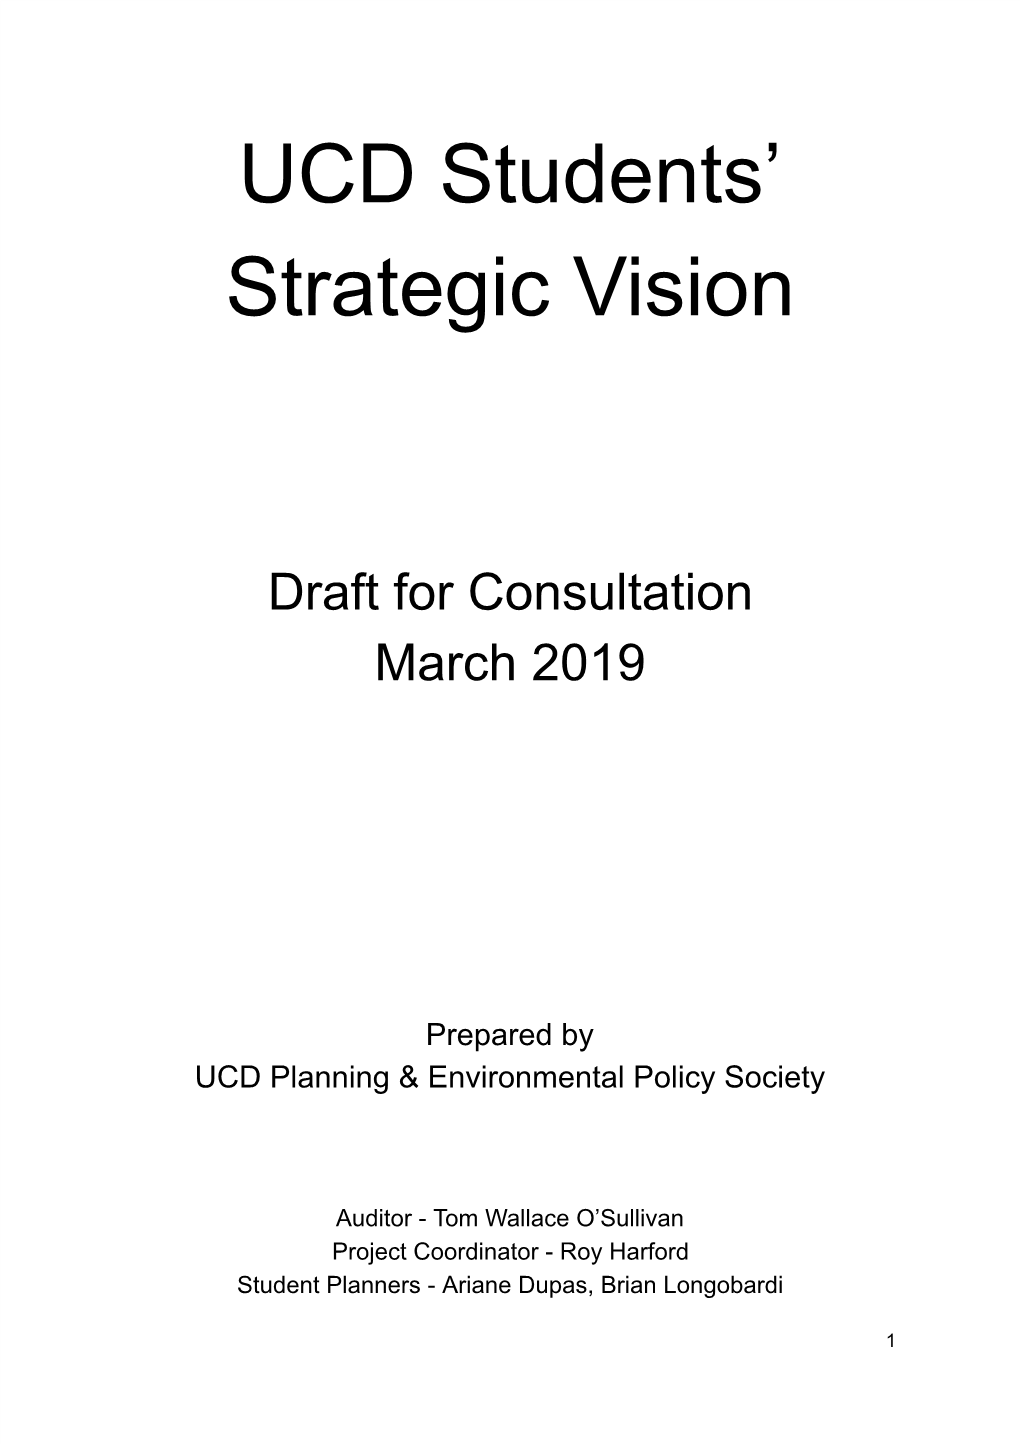 Draft UCD Students' Strategic Vision